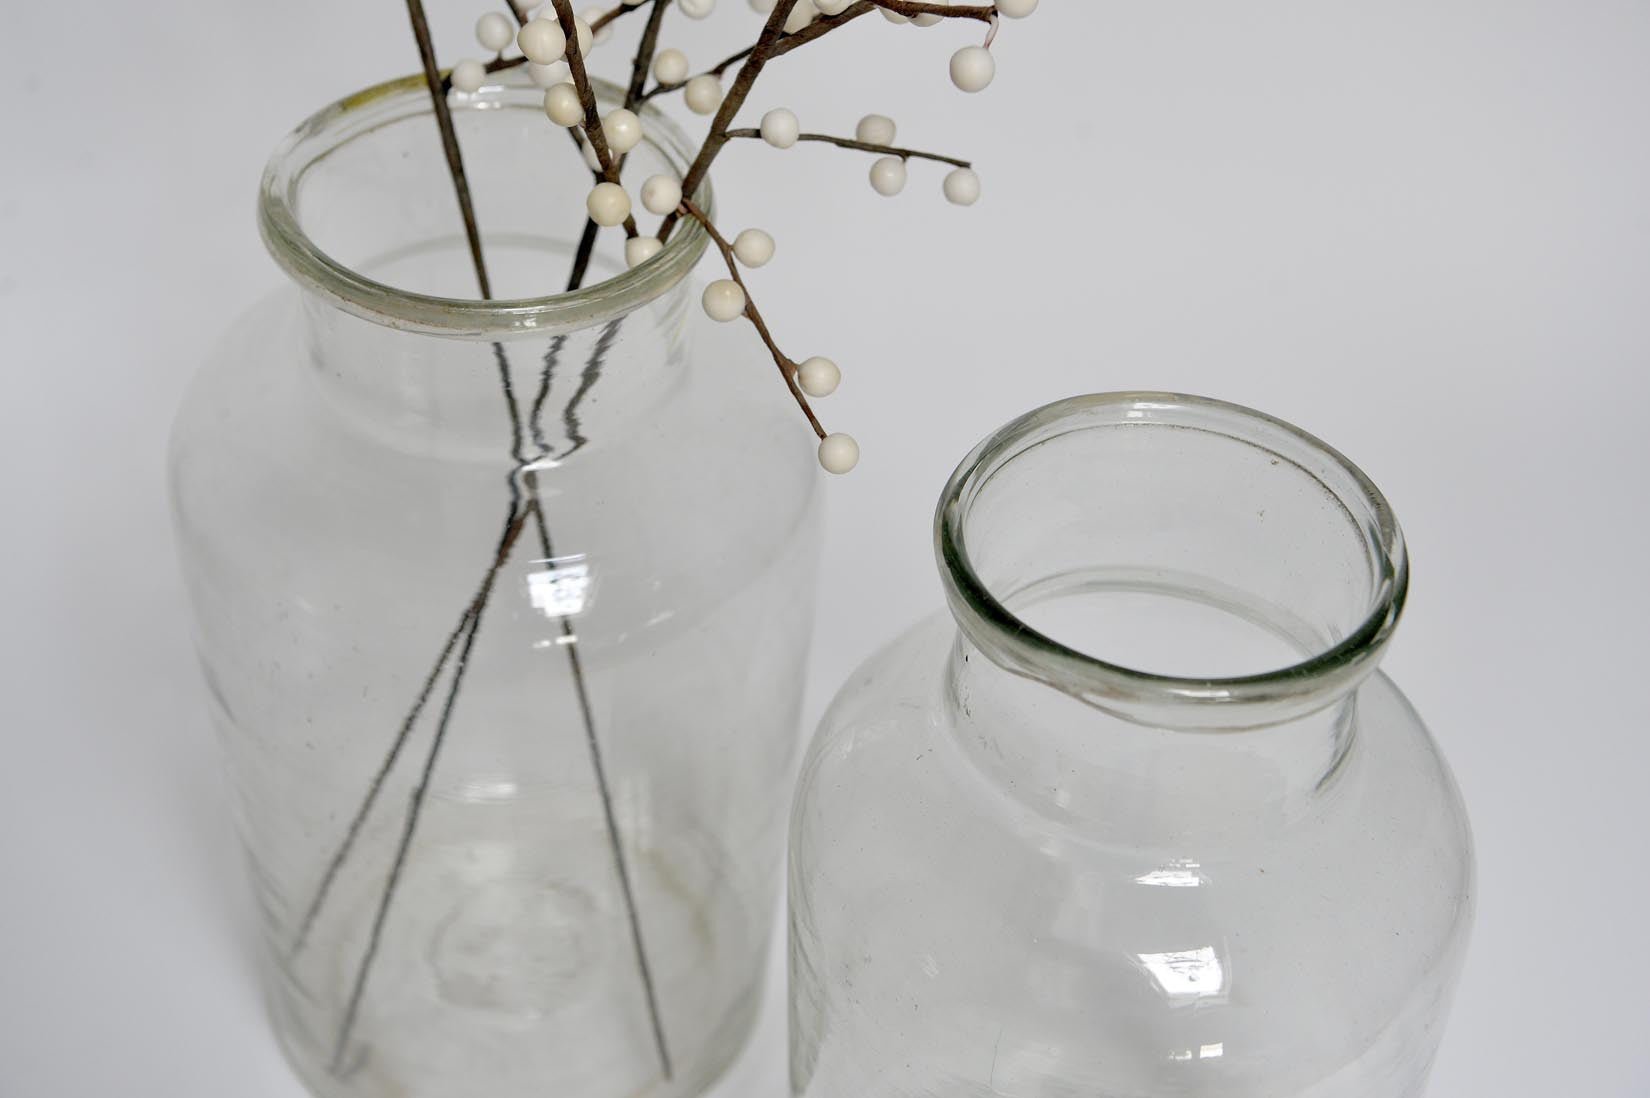 Blue or transparent glass jar - Natalia Willmott